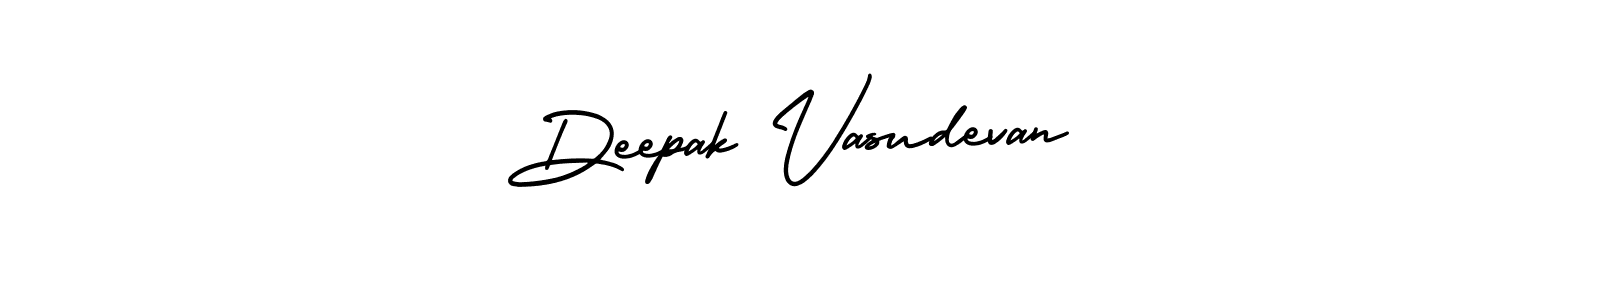 Make a beautiful signature design for name Deepak Vasudevan. Use this online signature maker to create a handwritten signature for free. Deepak Vasudevan signature style 3 images and pictures png